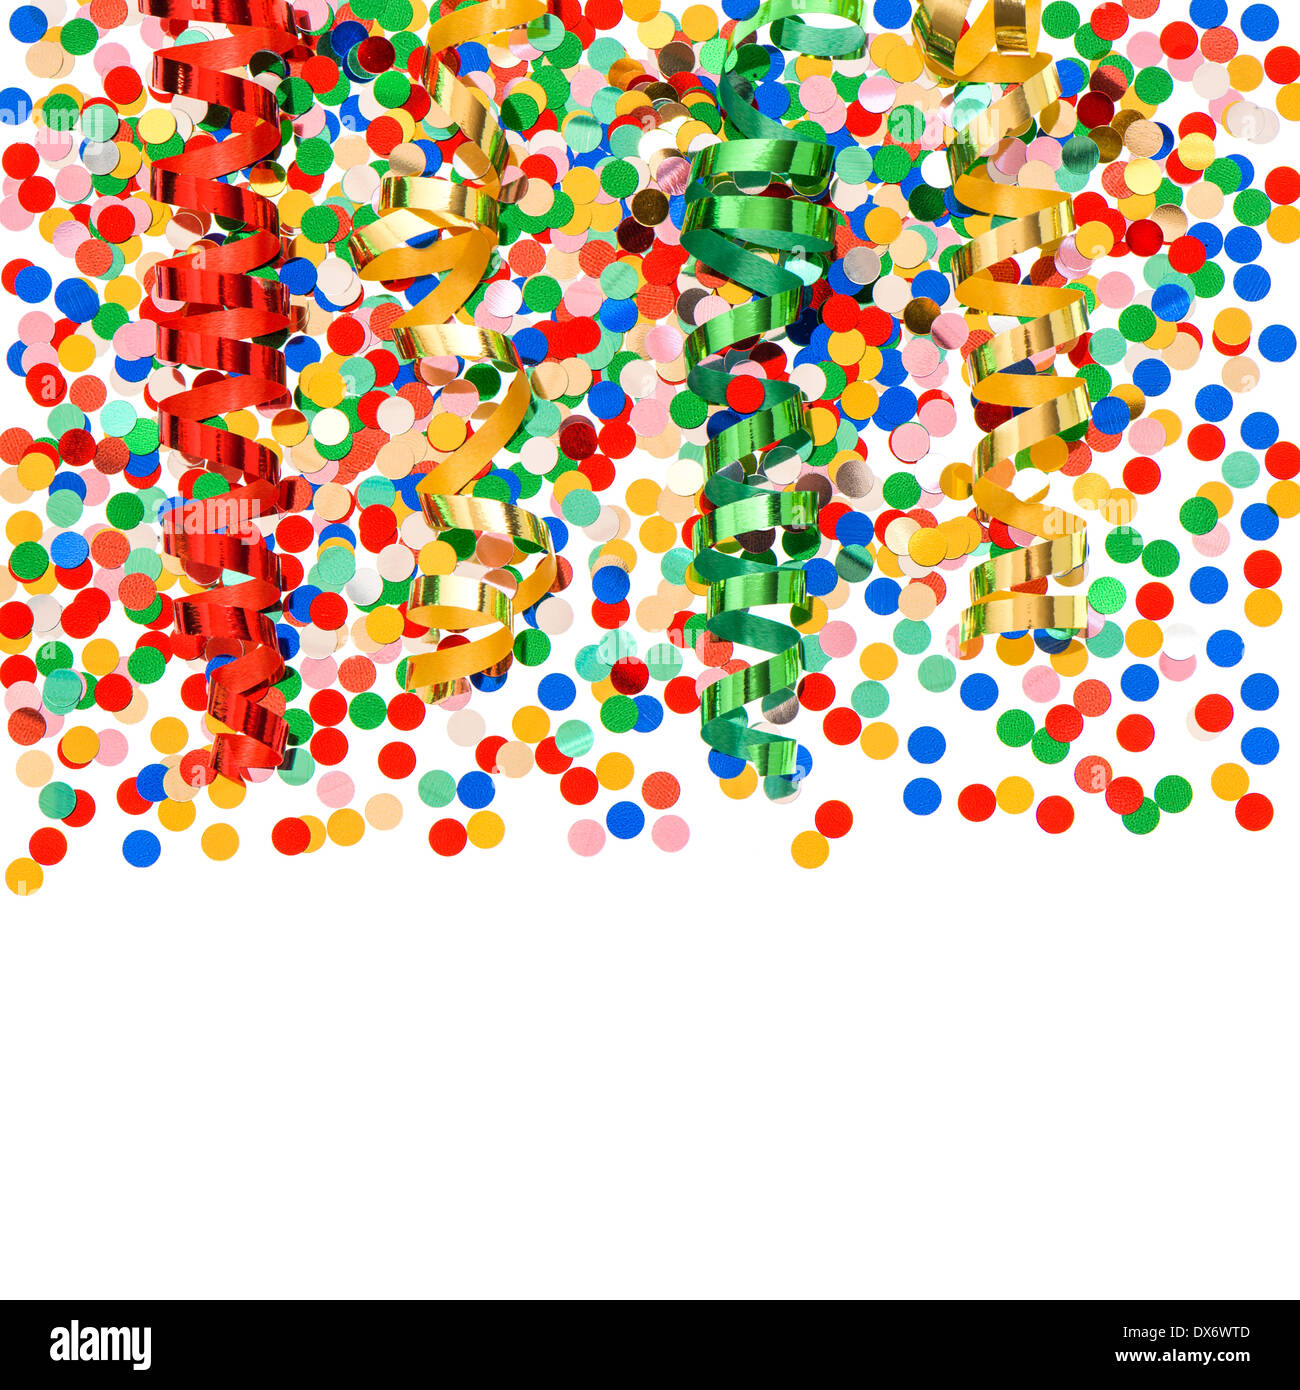 Confetti and streamers Stock Photo - Alamy